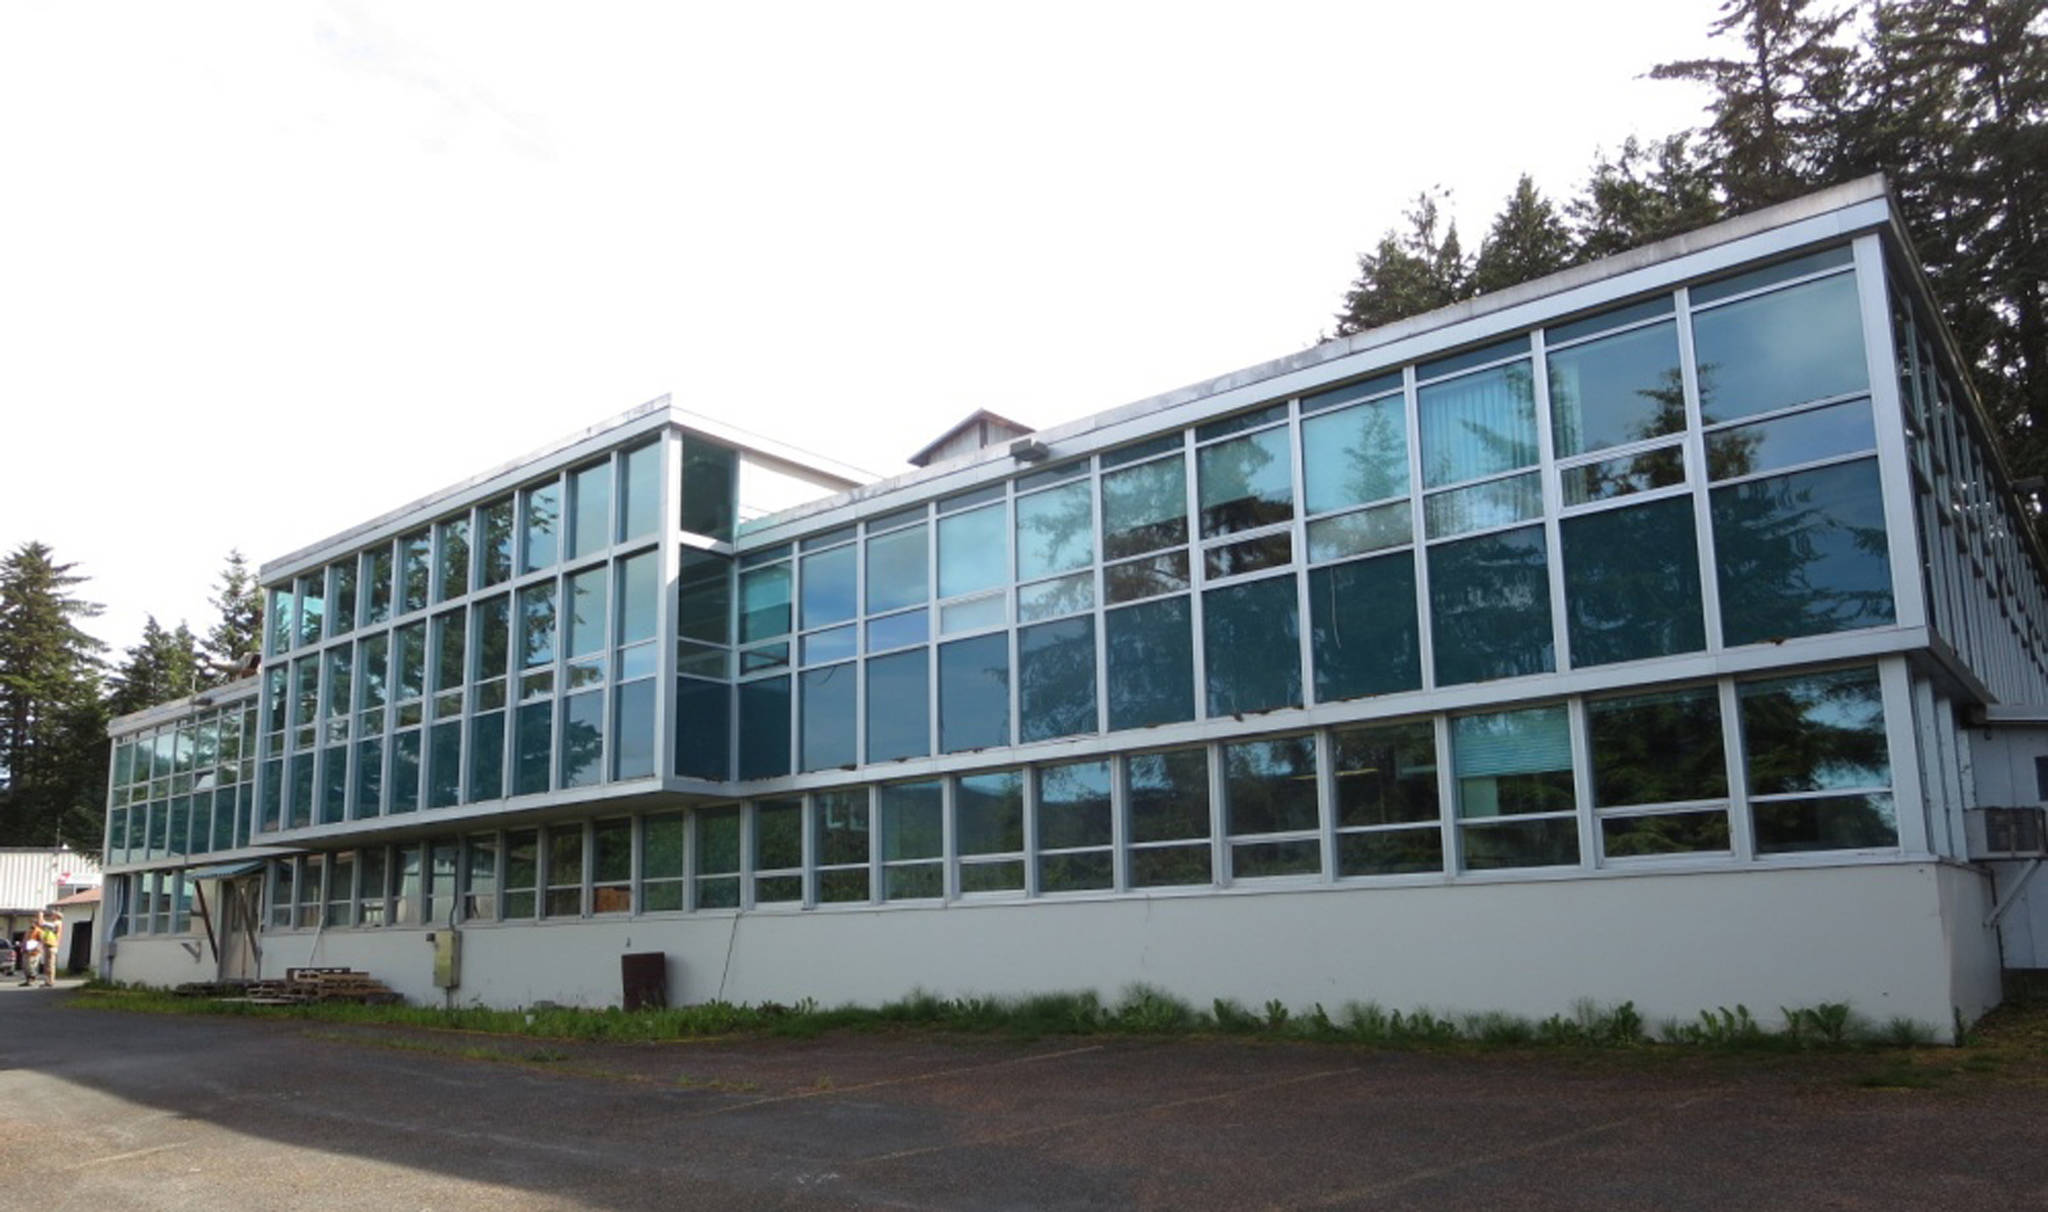 Auke Bay lab set to be demolished this fall